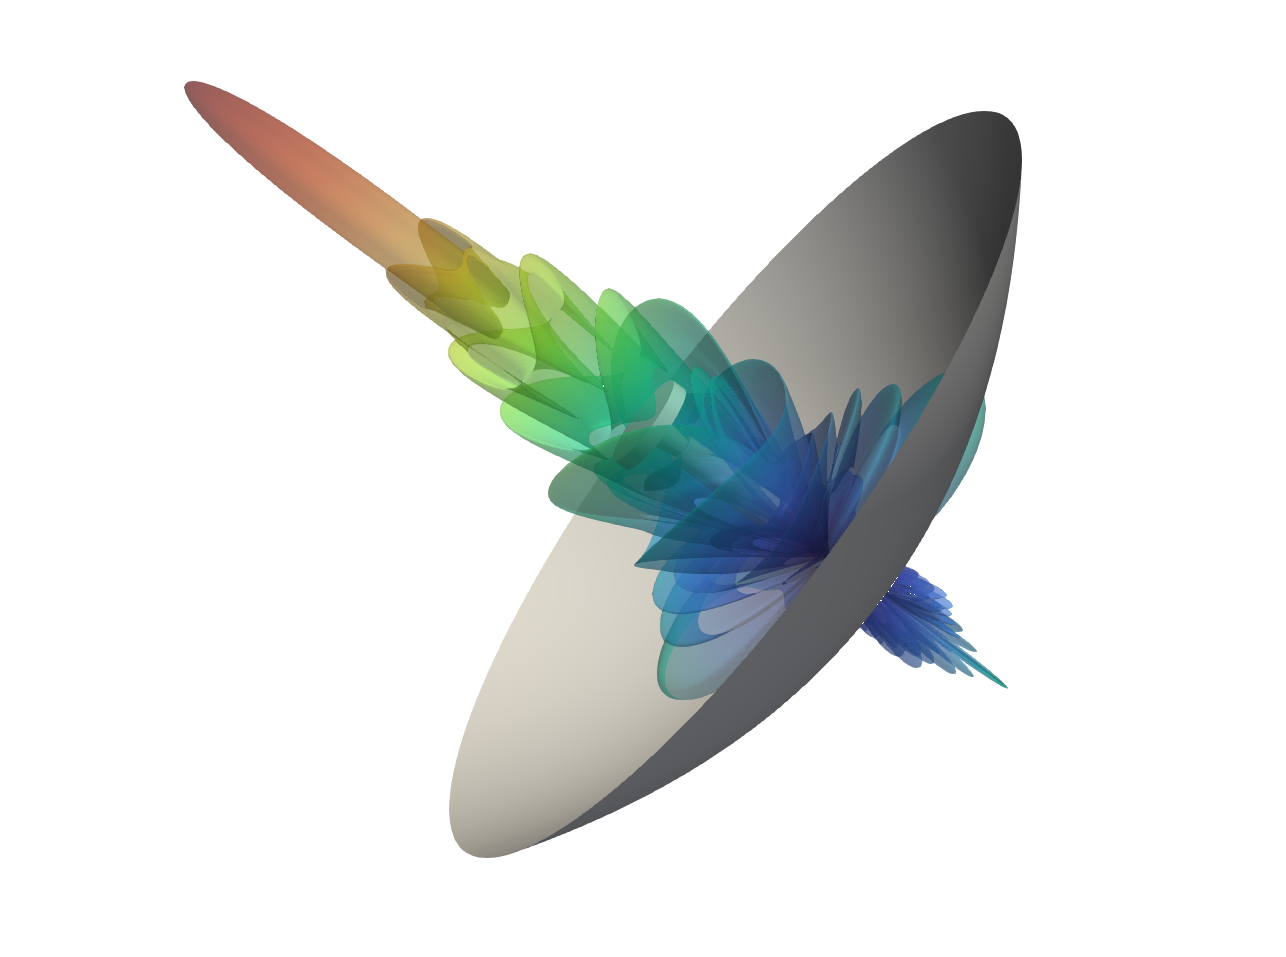 Nullspace EM 3D gain pattern for a Ku-band “splash plate” reflector for an antenna